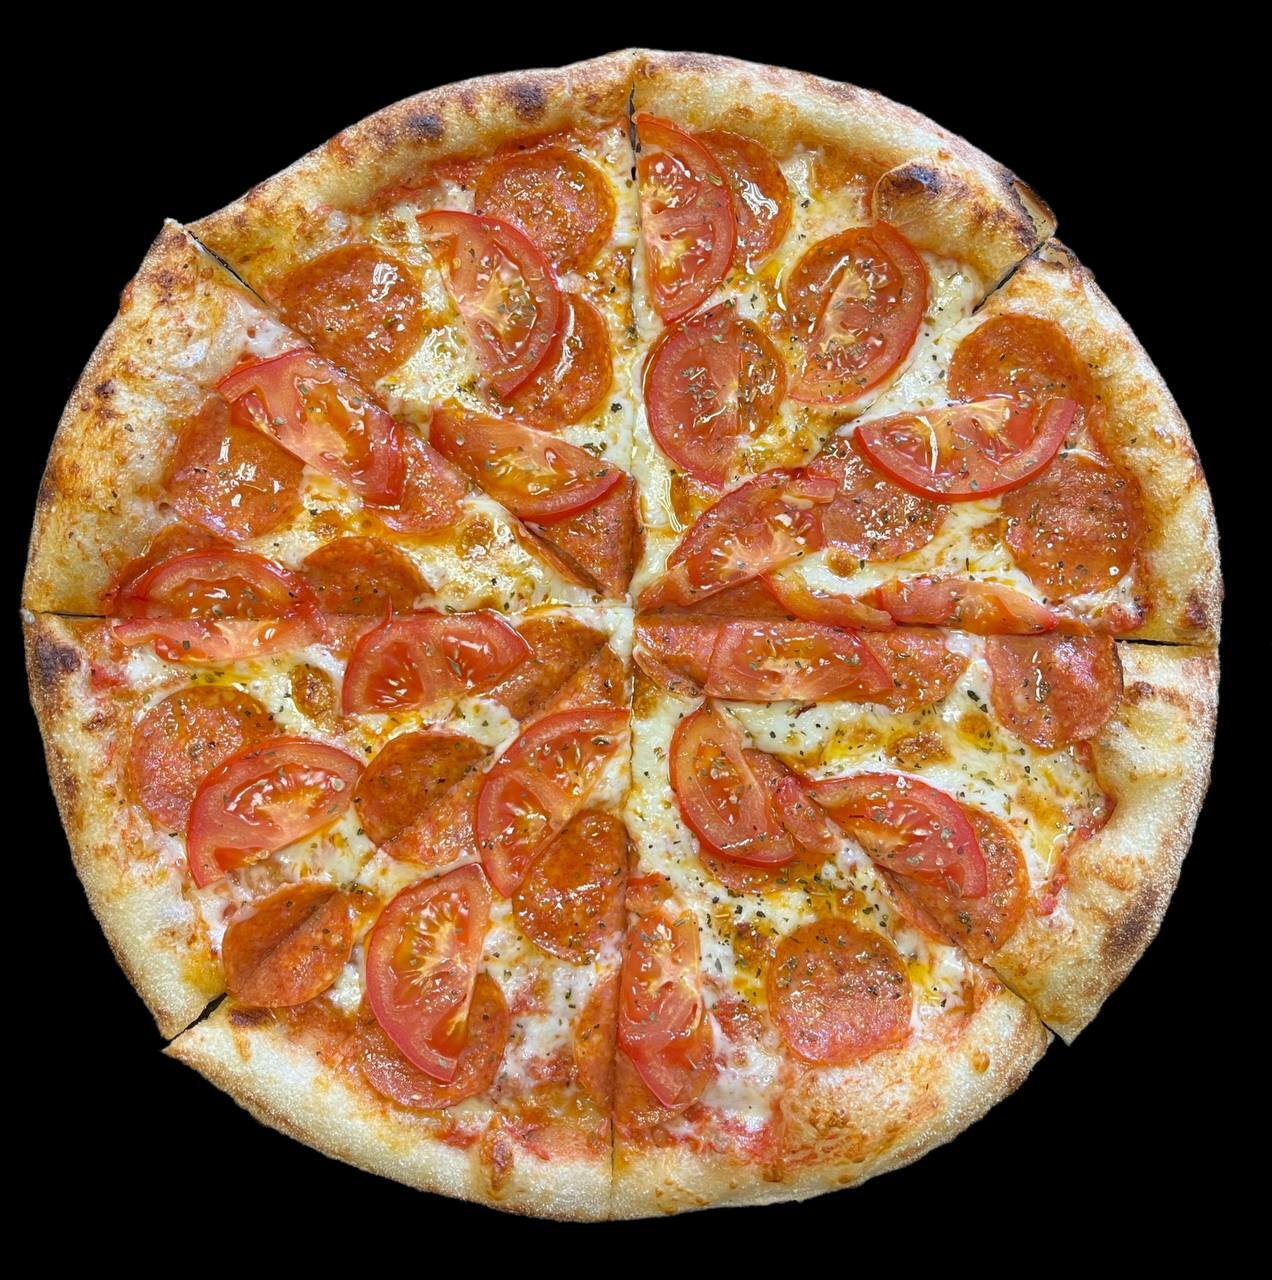 технологическая карта пицца пепперони 30 см фото 57